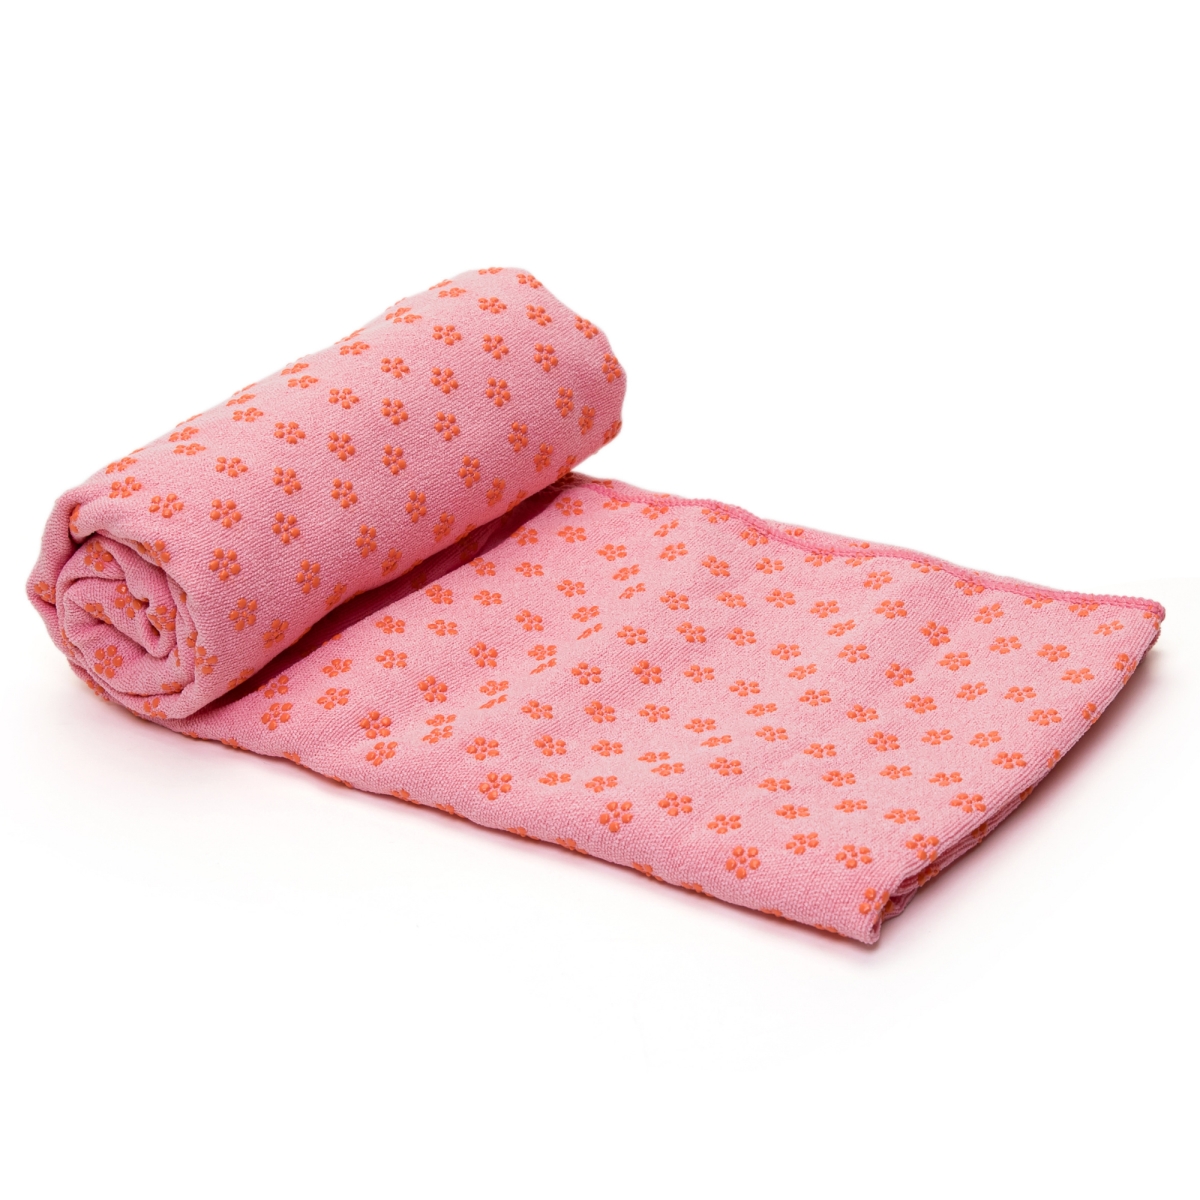 Picture of JupiterGear JG-YOGATWL-SOLID-LGTPNK Premium Absorption Hot Yoga Mat Towel with Slip-Resistant Grip Dots - Light Pink